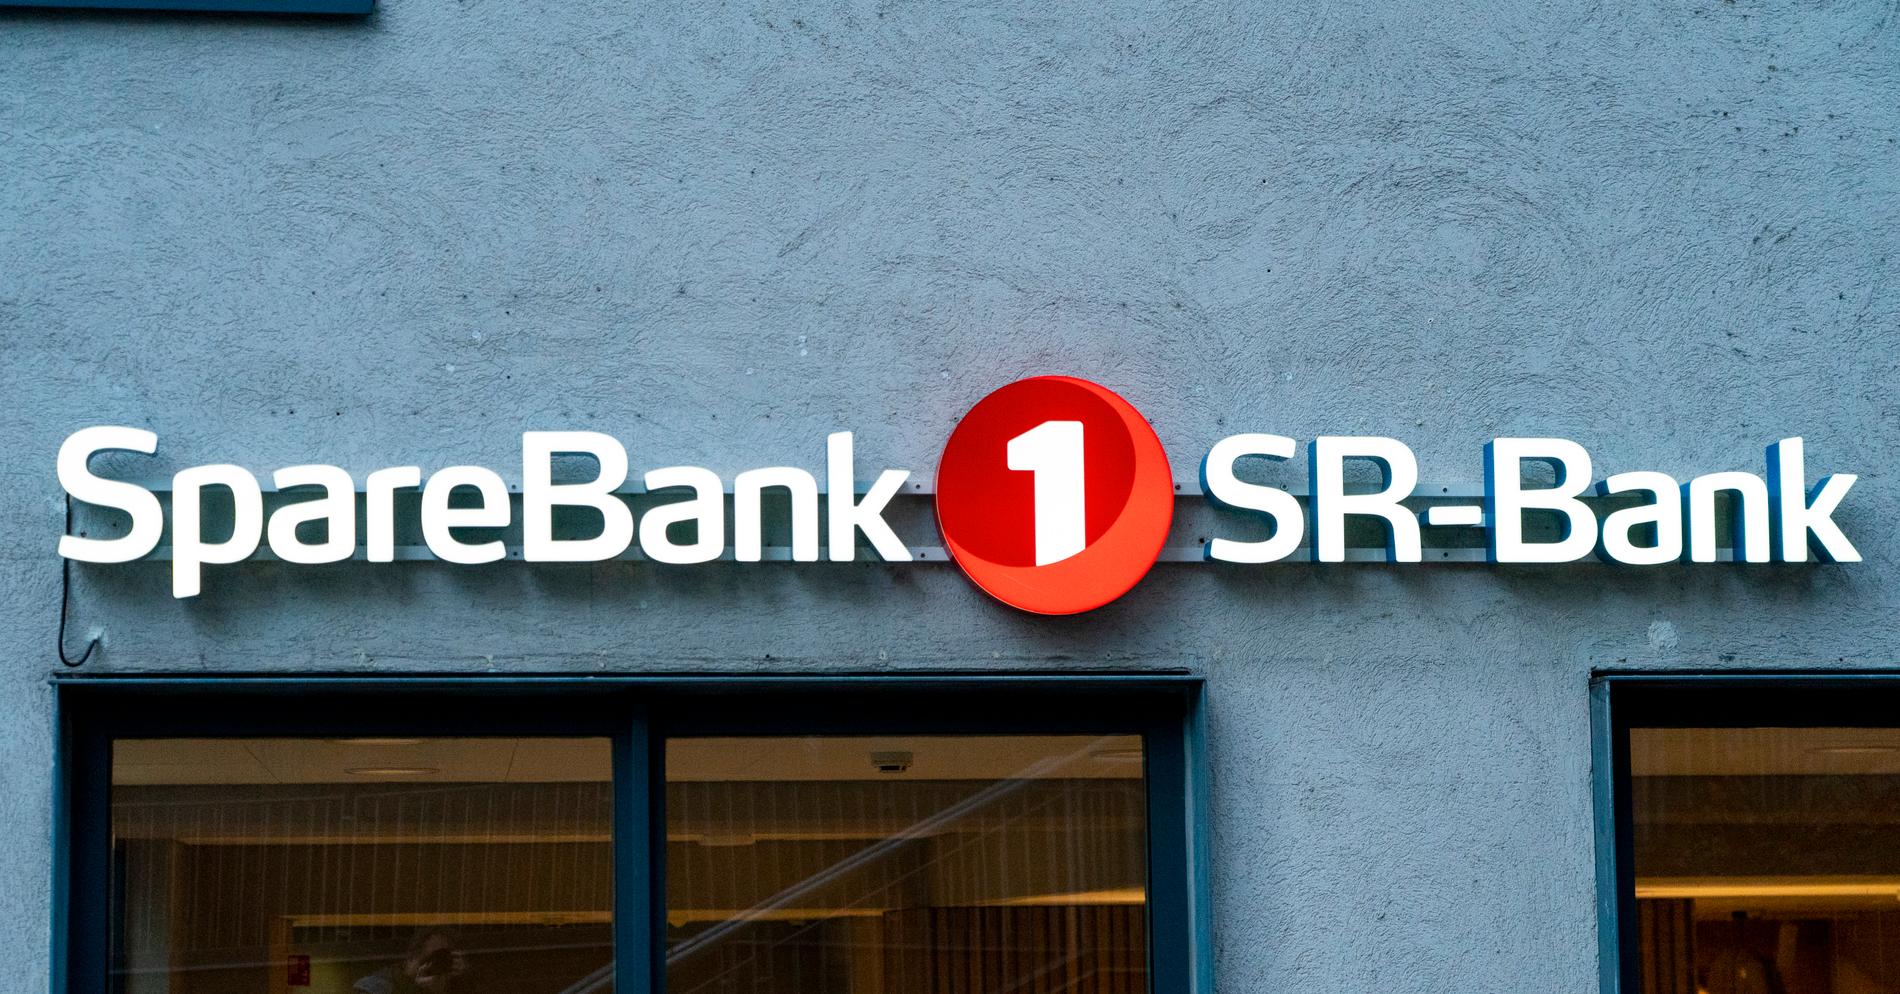 Sparebank 1 SR Bank økte renteinntektene kraftig